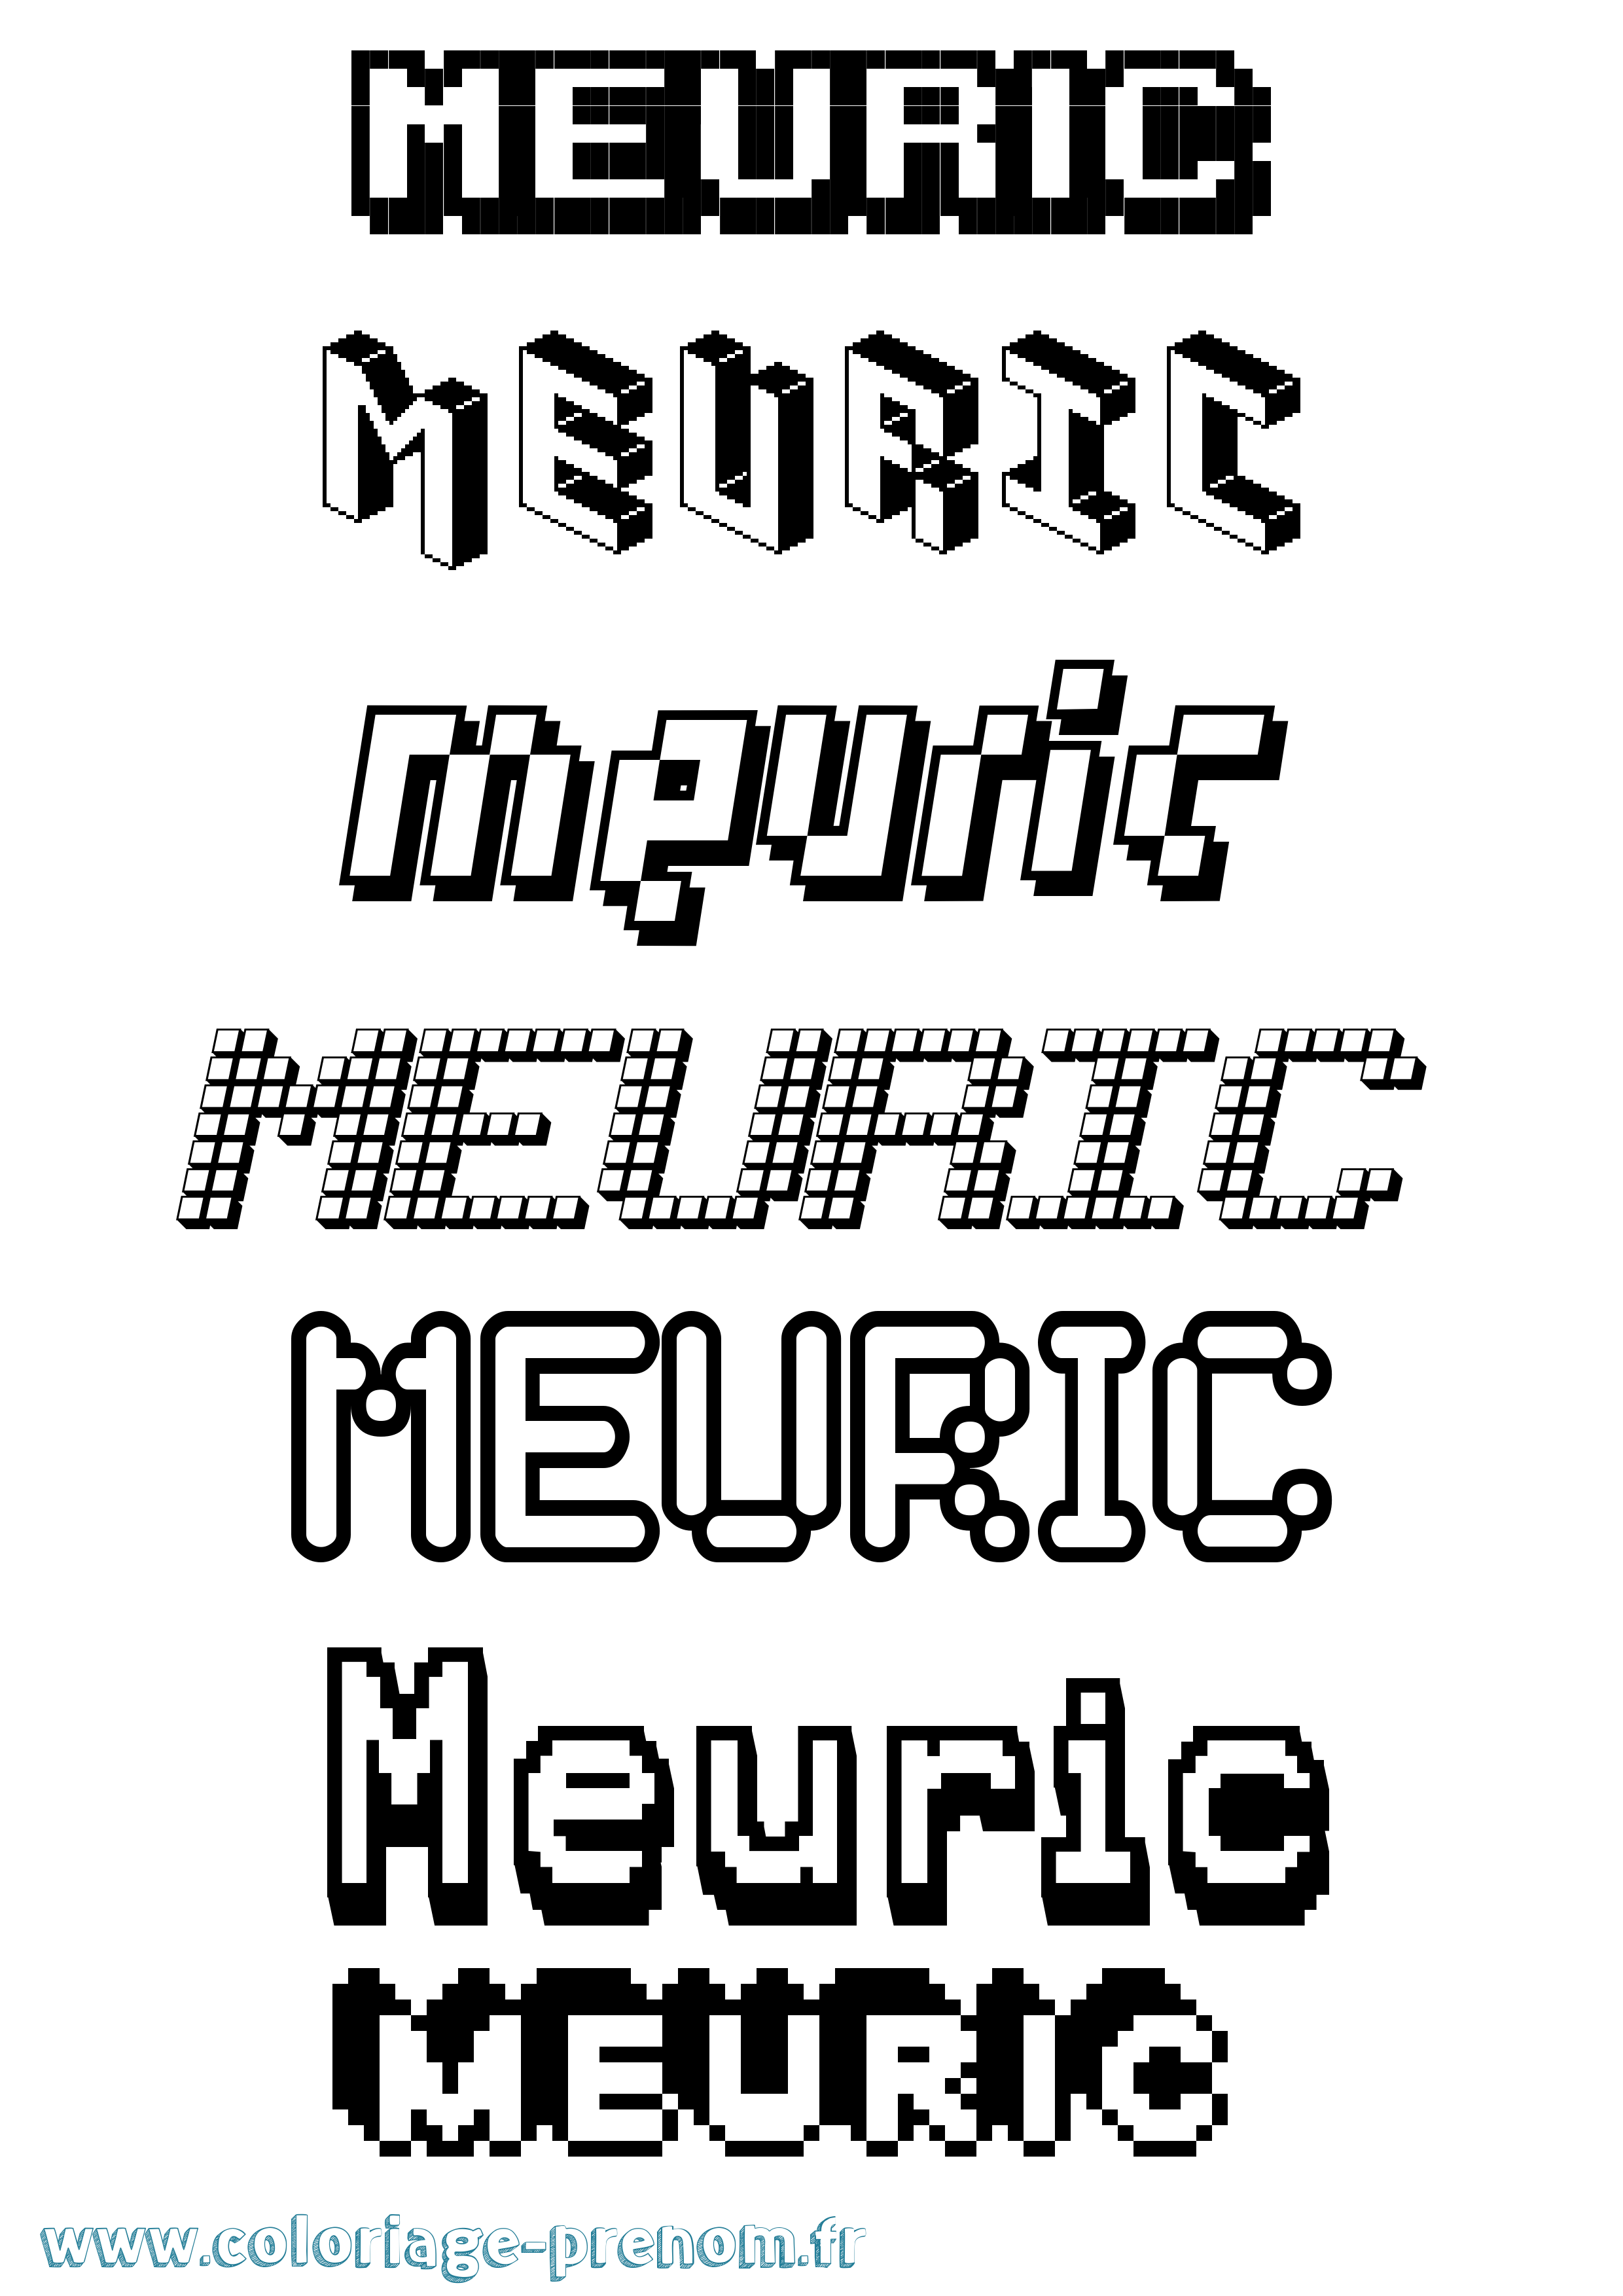 Coloriage prénom Meuric Pixel